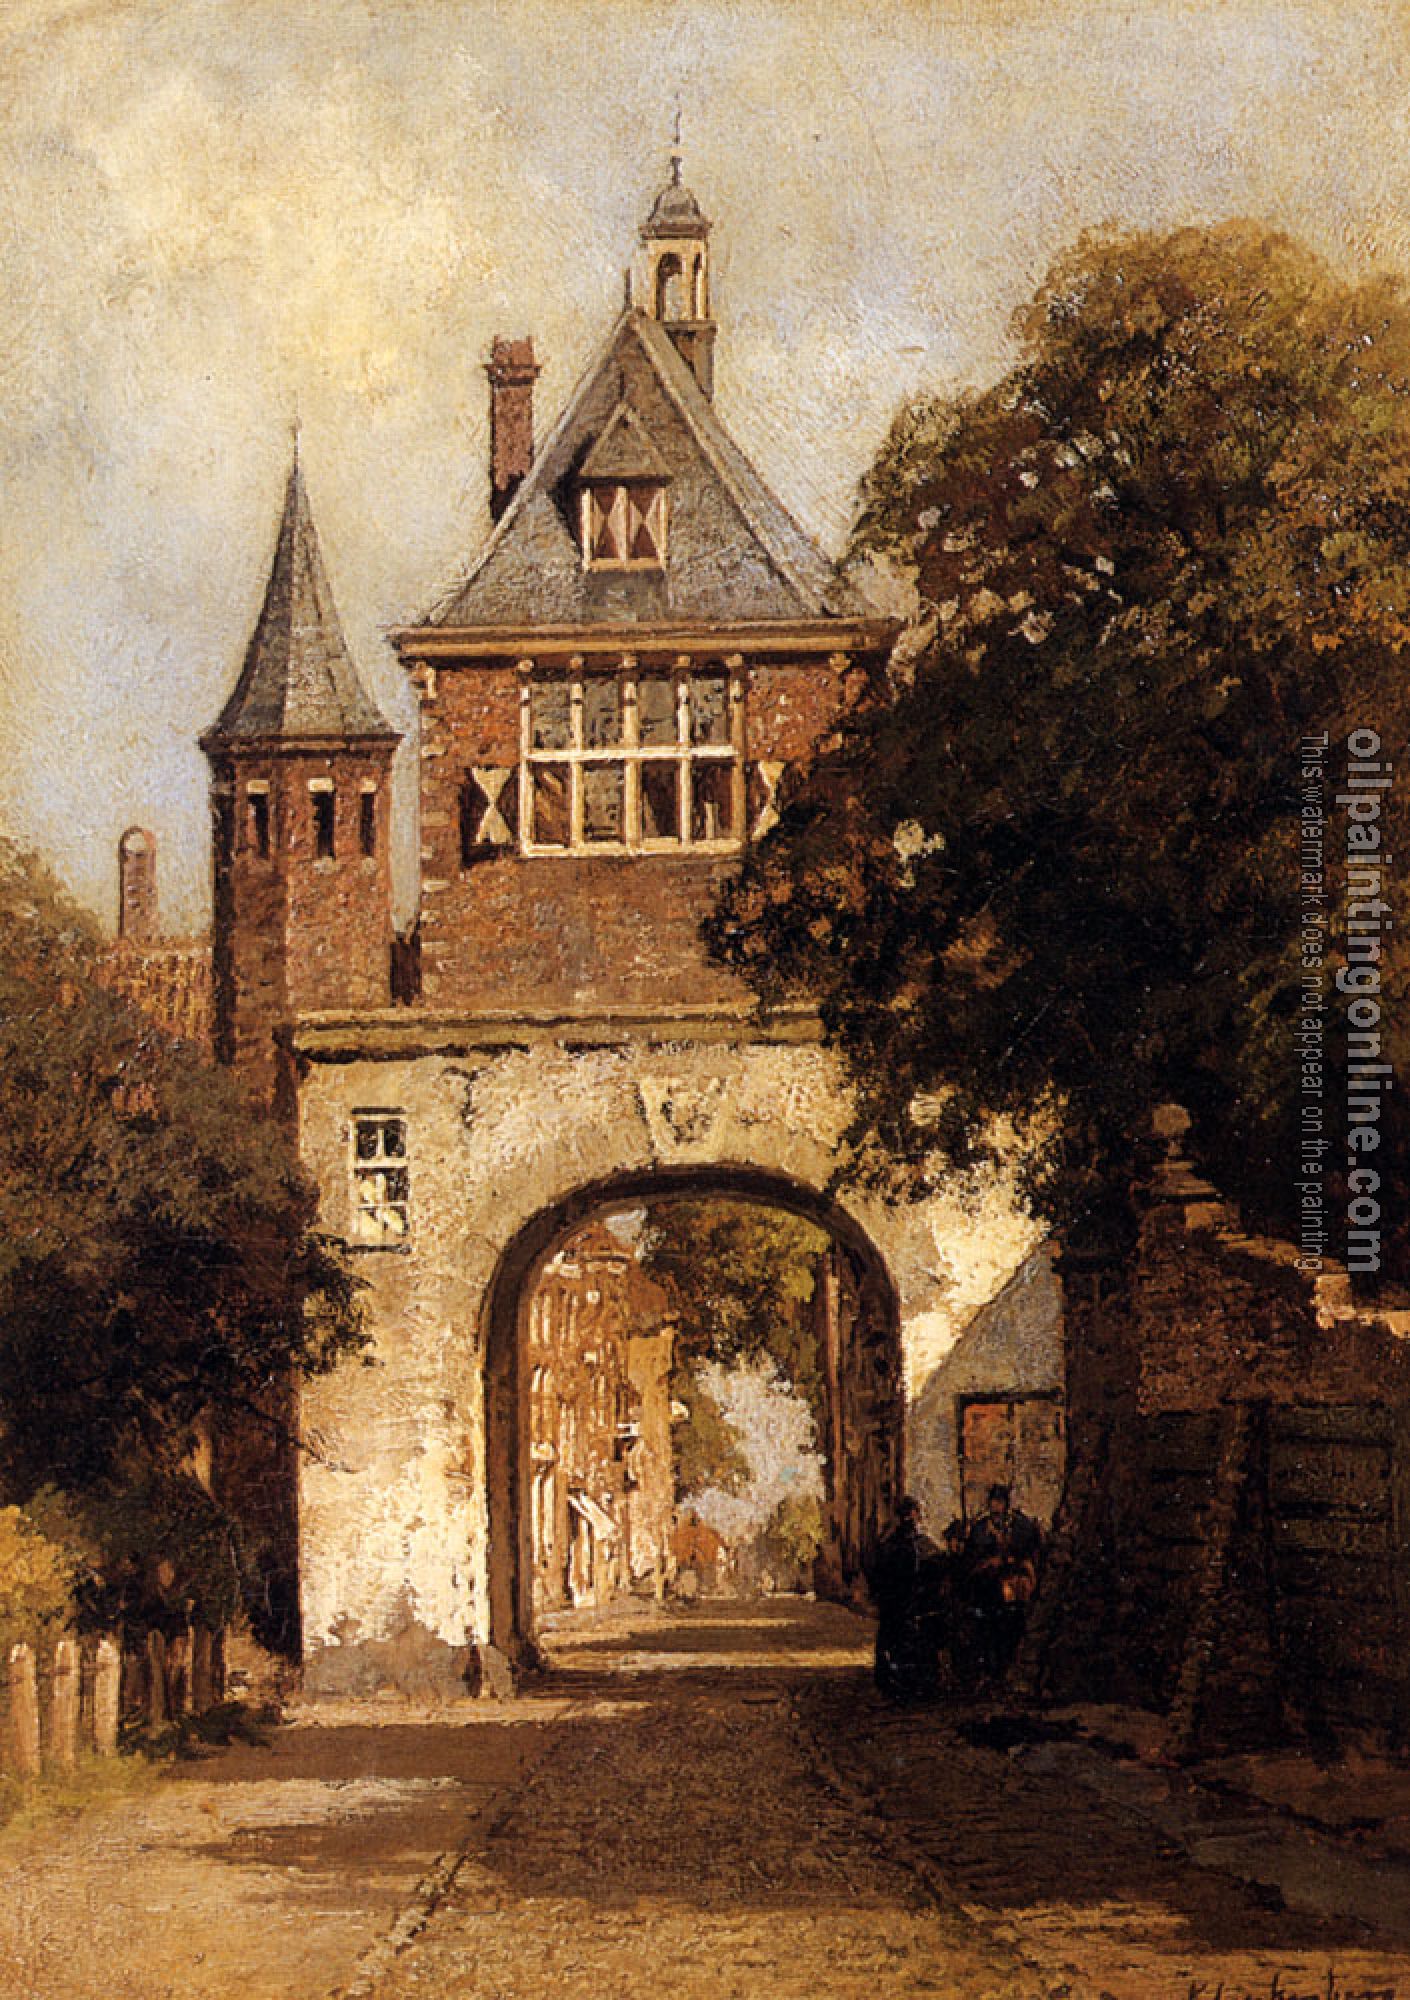 Johannes Christiaan Karel Klinkenberg - A City Gate